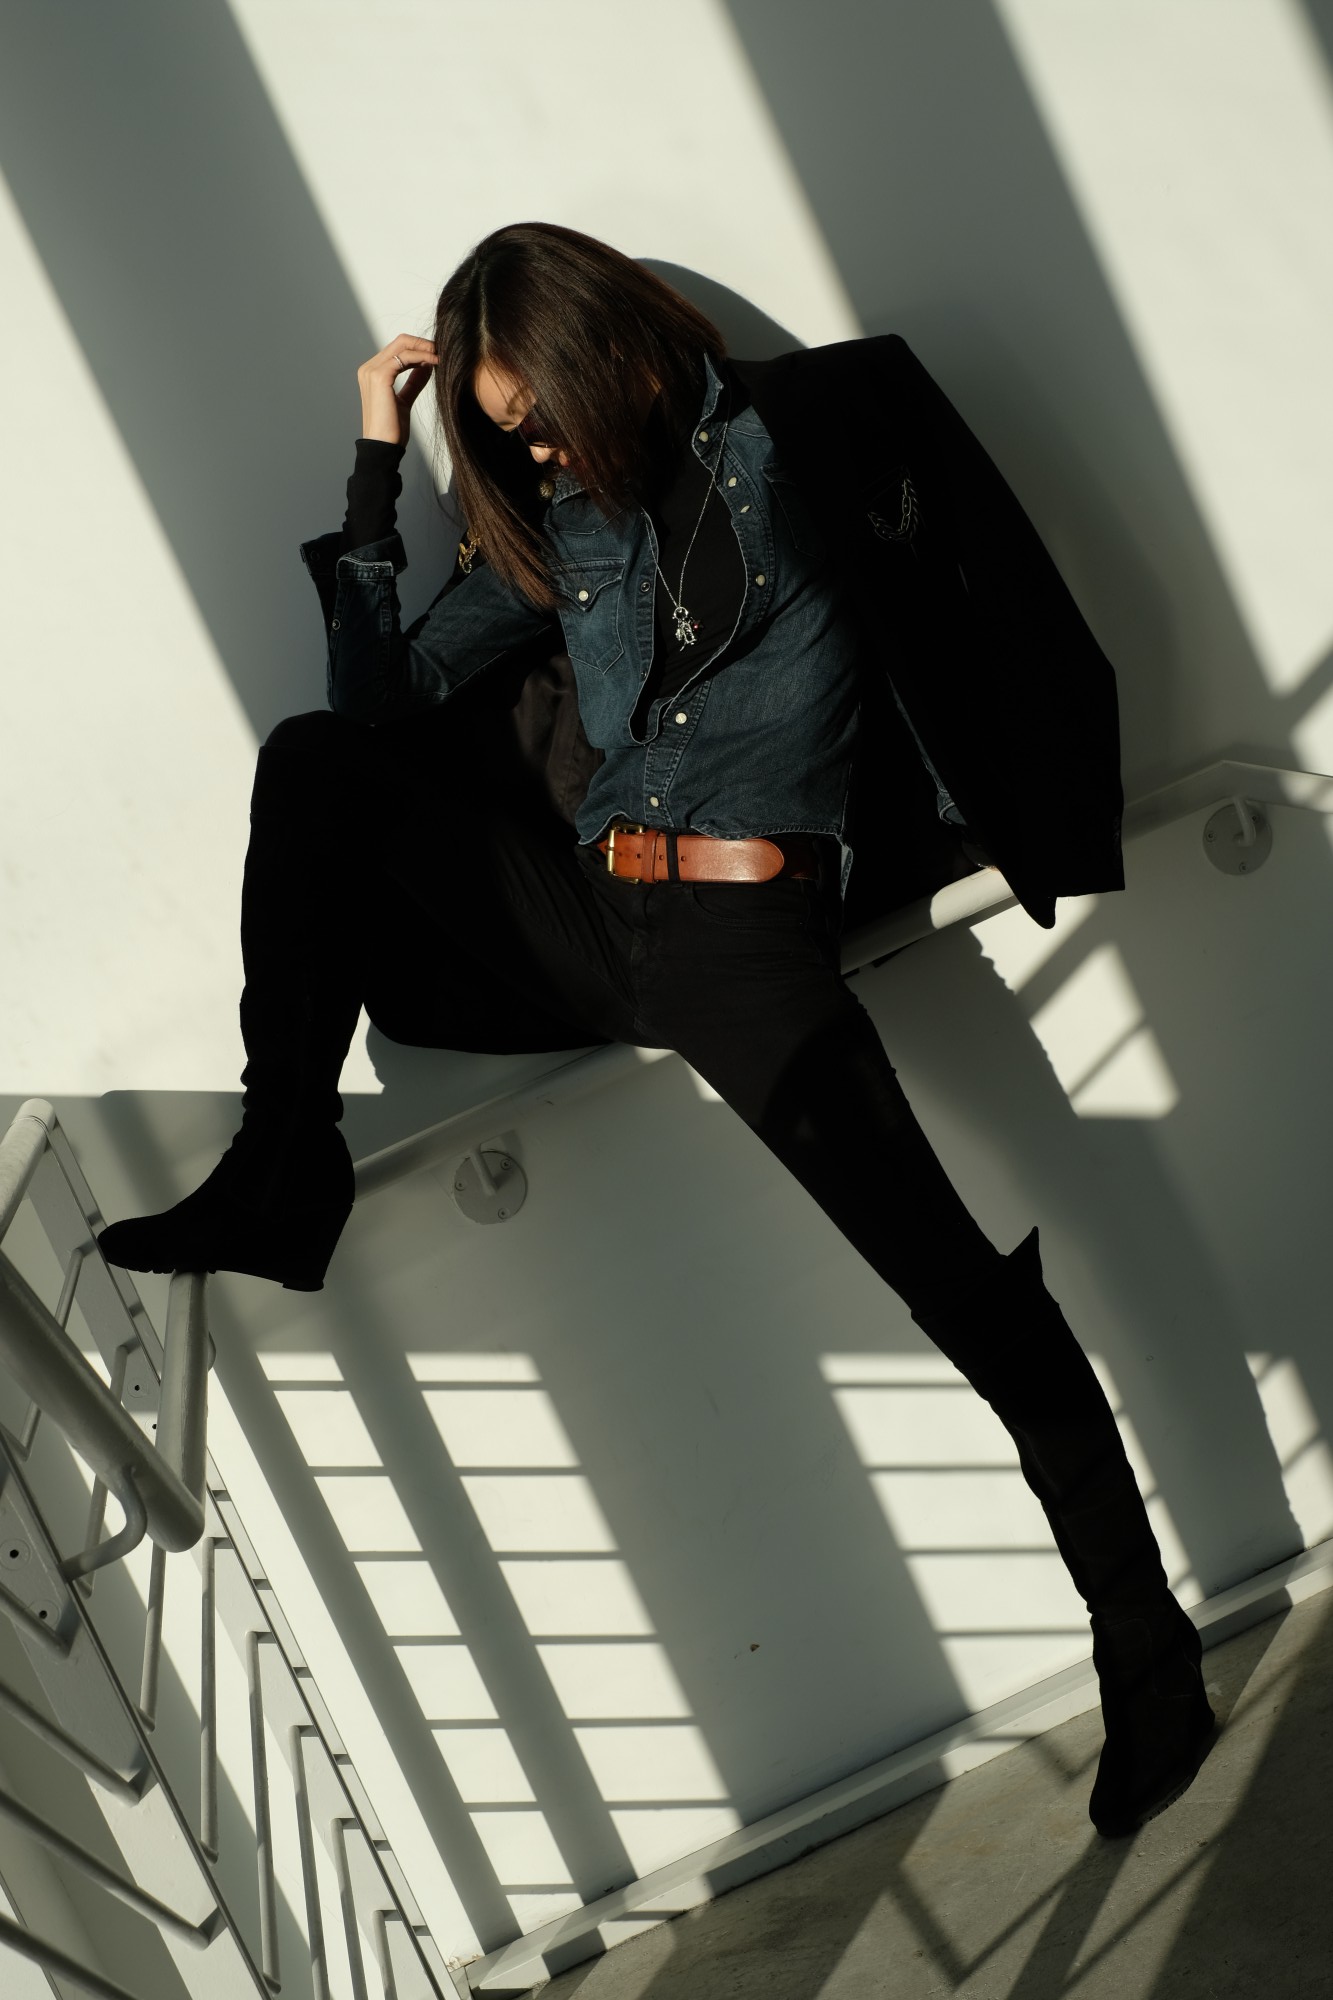 model in black outfit in shadowed stairwell